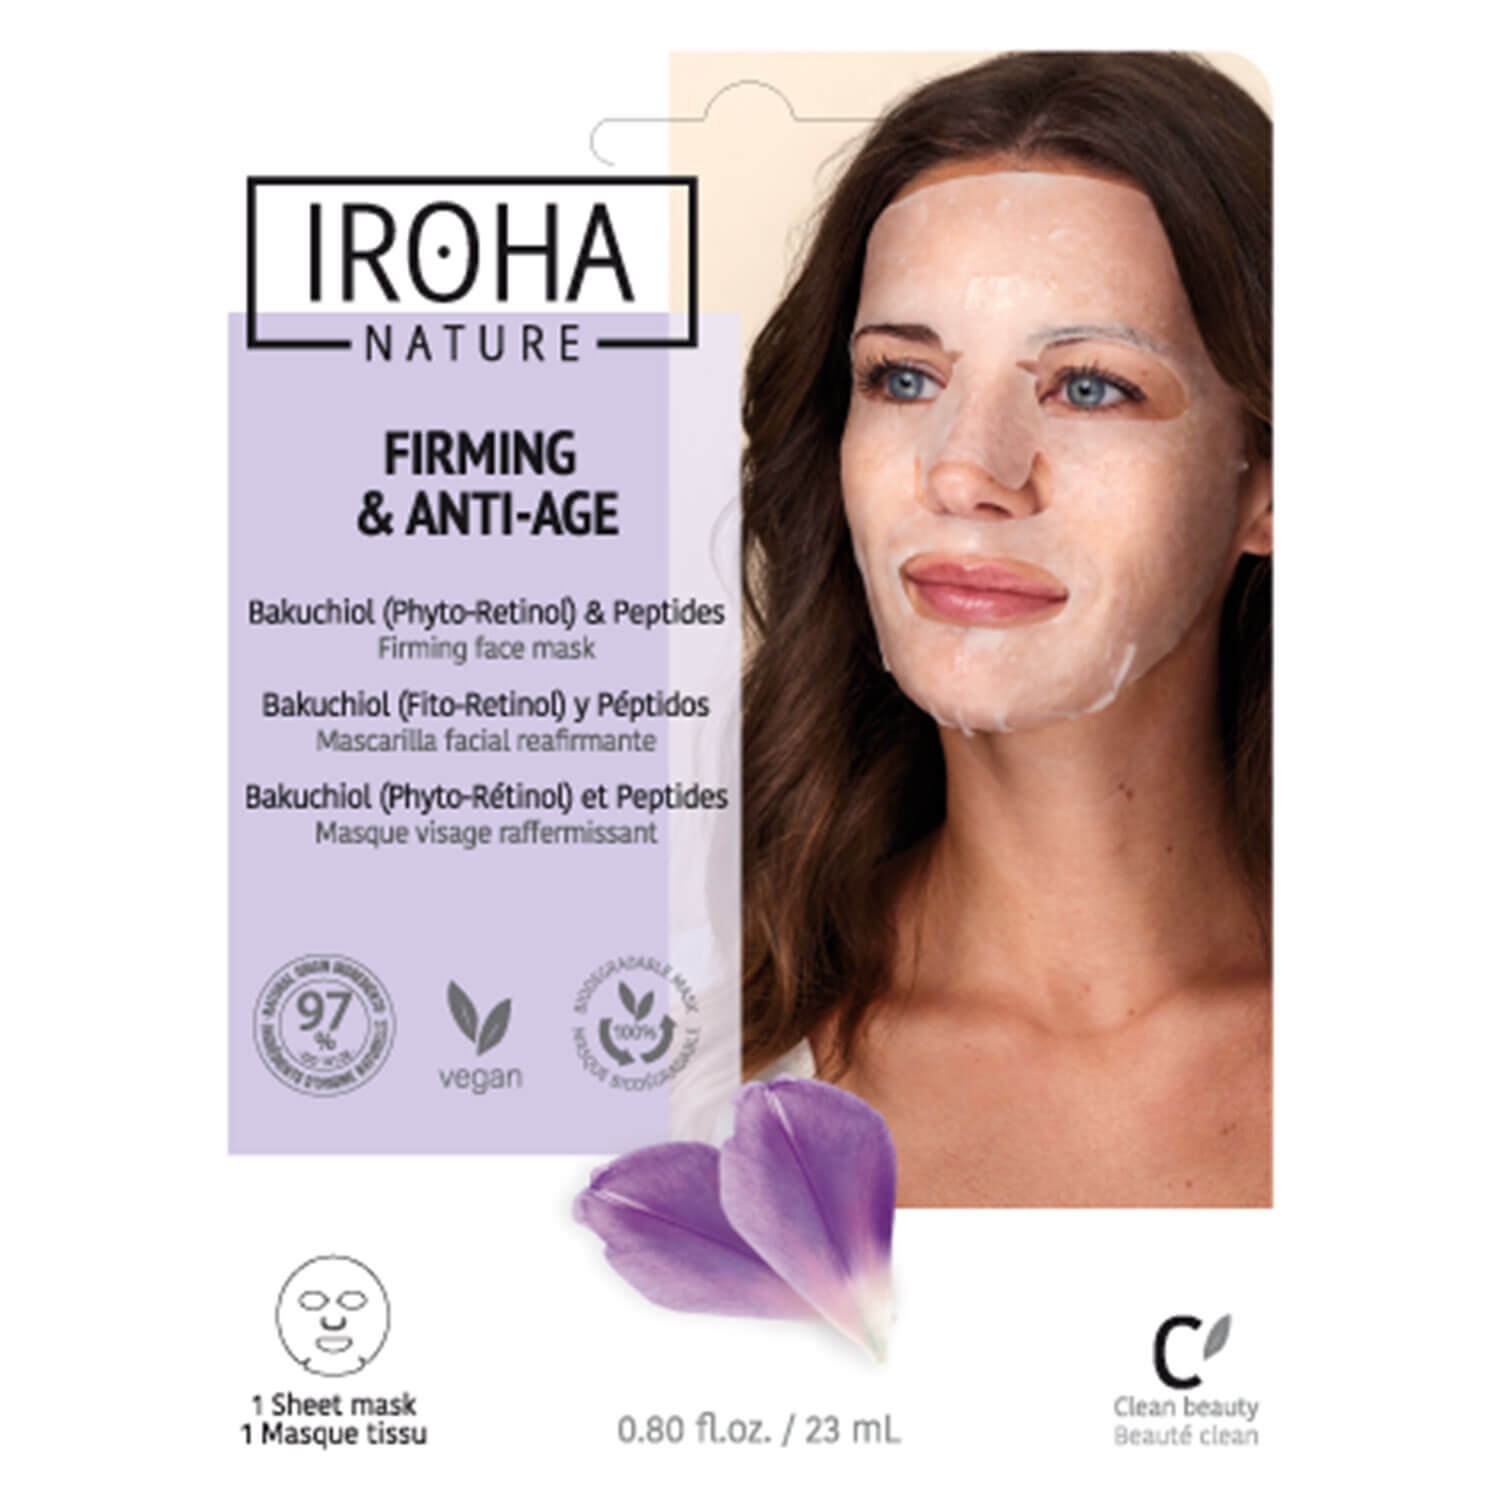 Produktbild von Iroha Nature - Firming & Anti-Age Bakuchiol & Peptides Face Mask